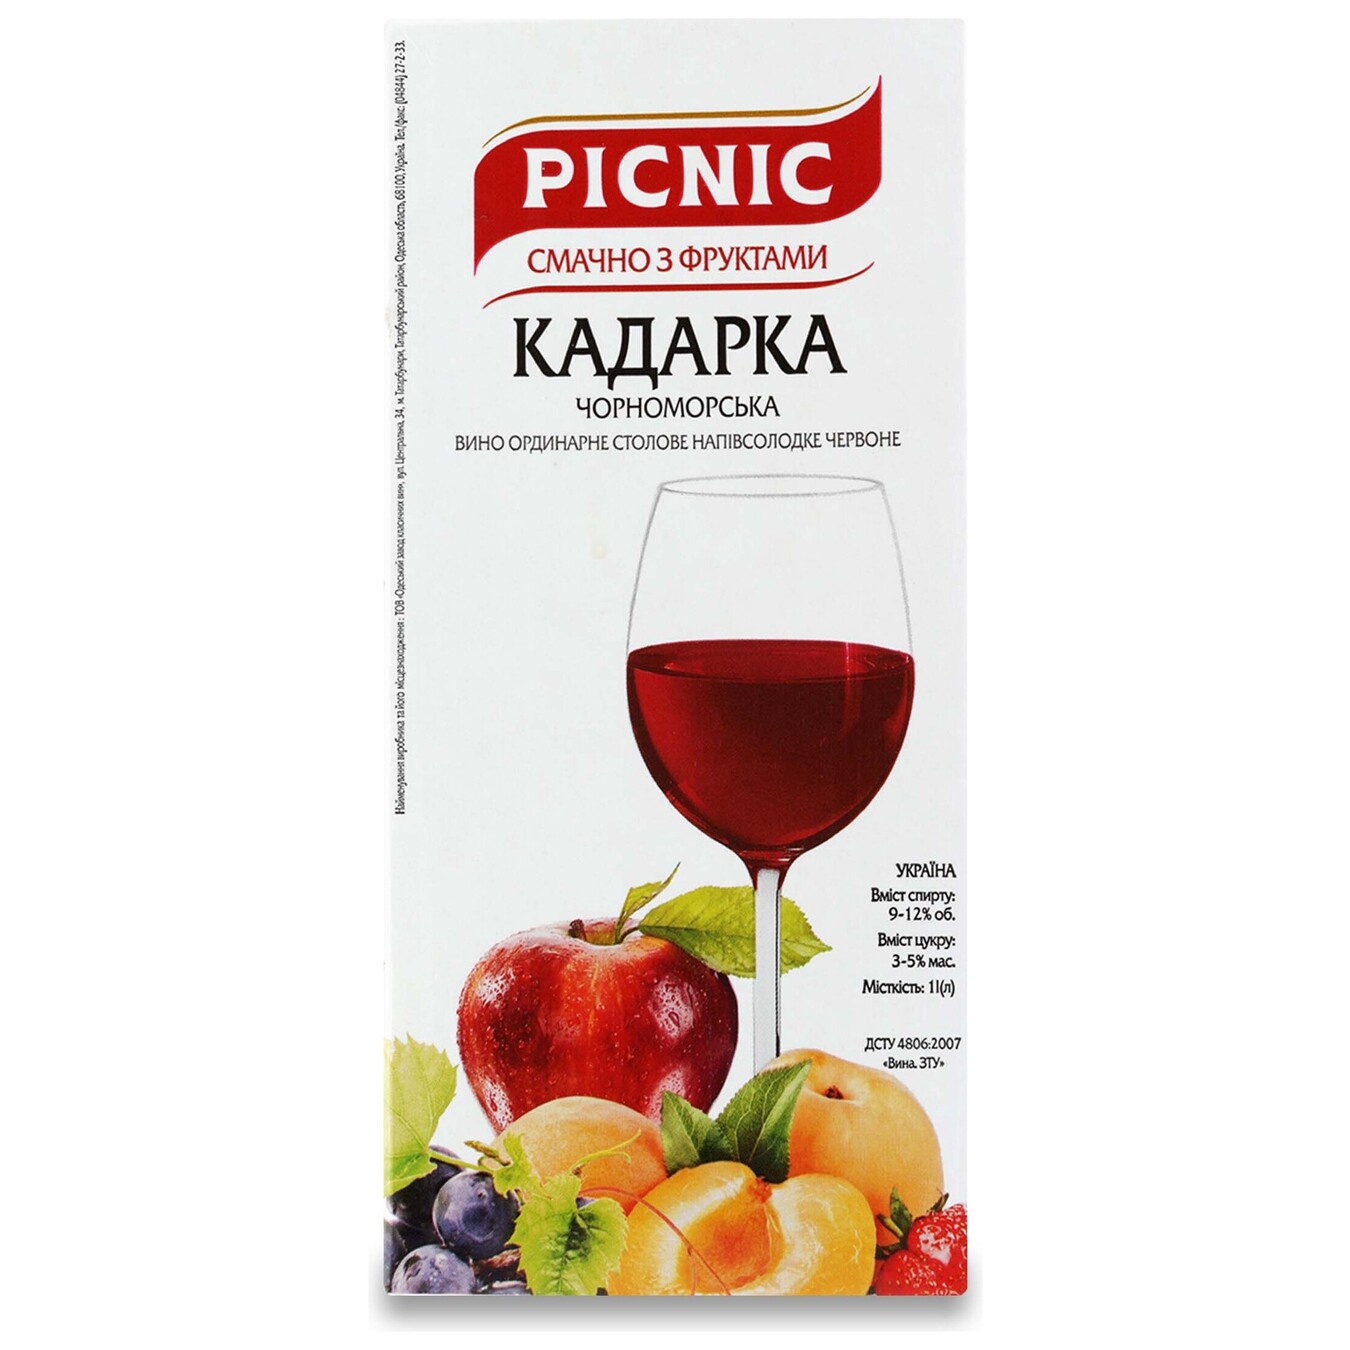 Picnic Kadarka chornomorska Wine red semi-sweet 12% 1l